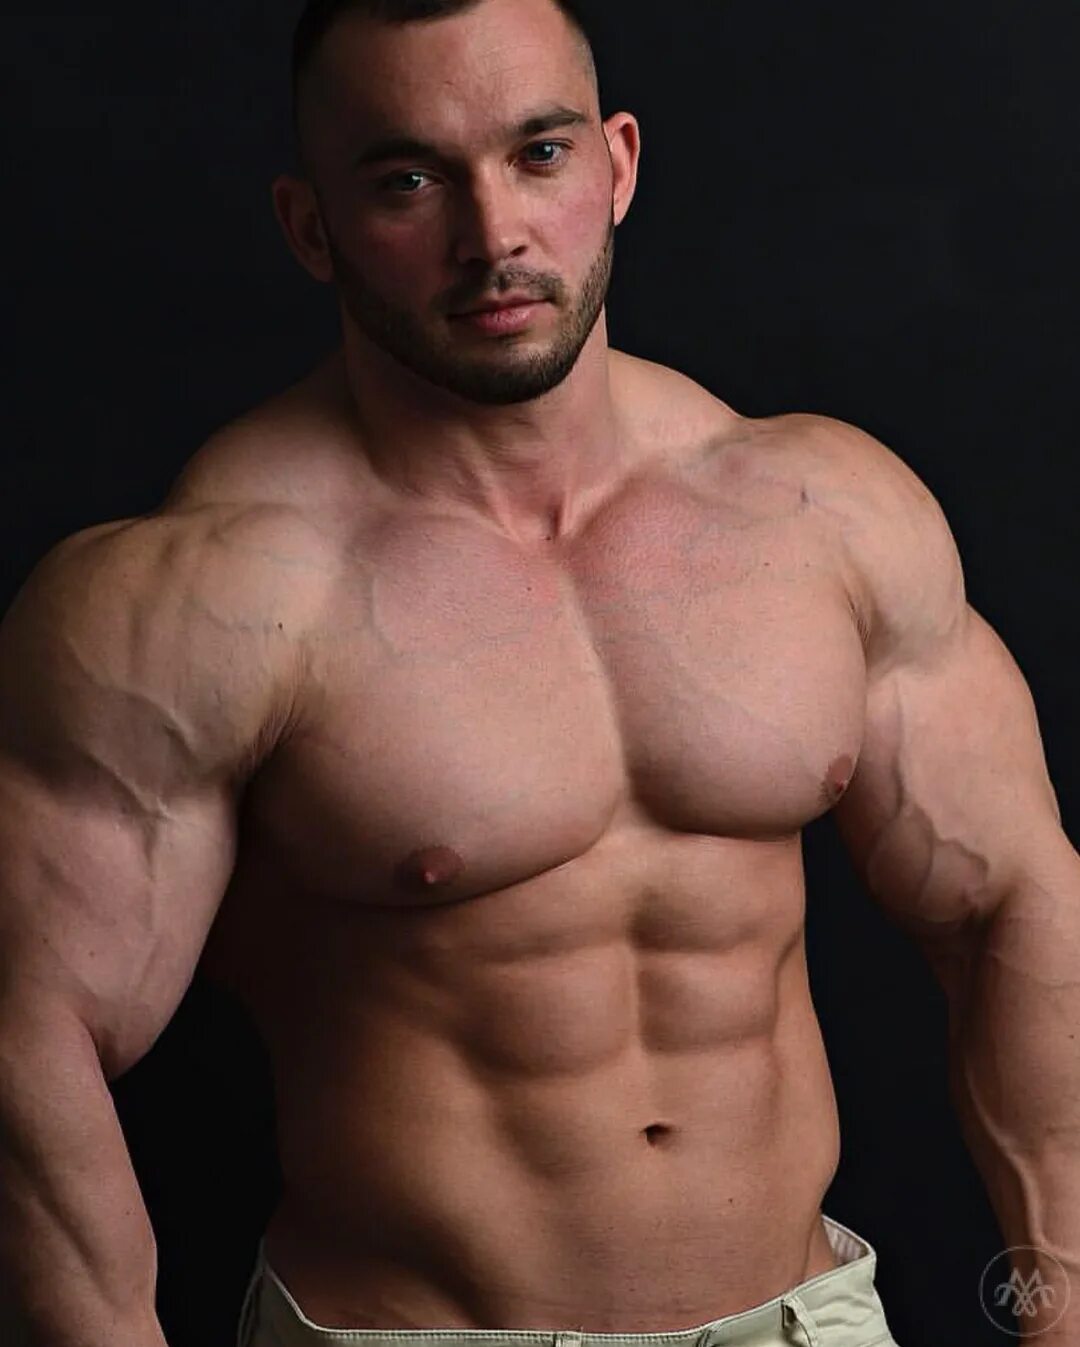 ▶ Follow @muscular_world for more photos/videos of incredible bodybuilders ...